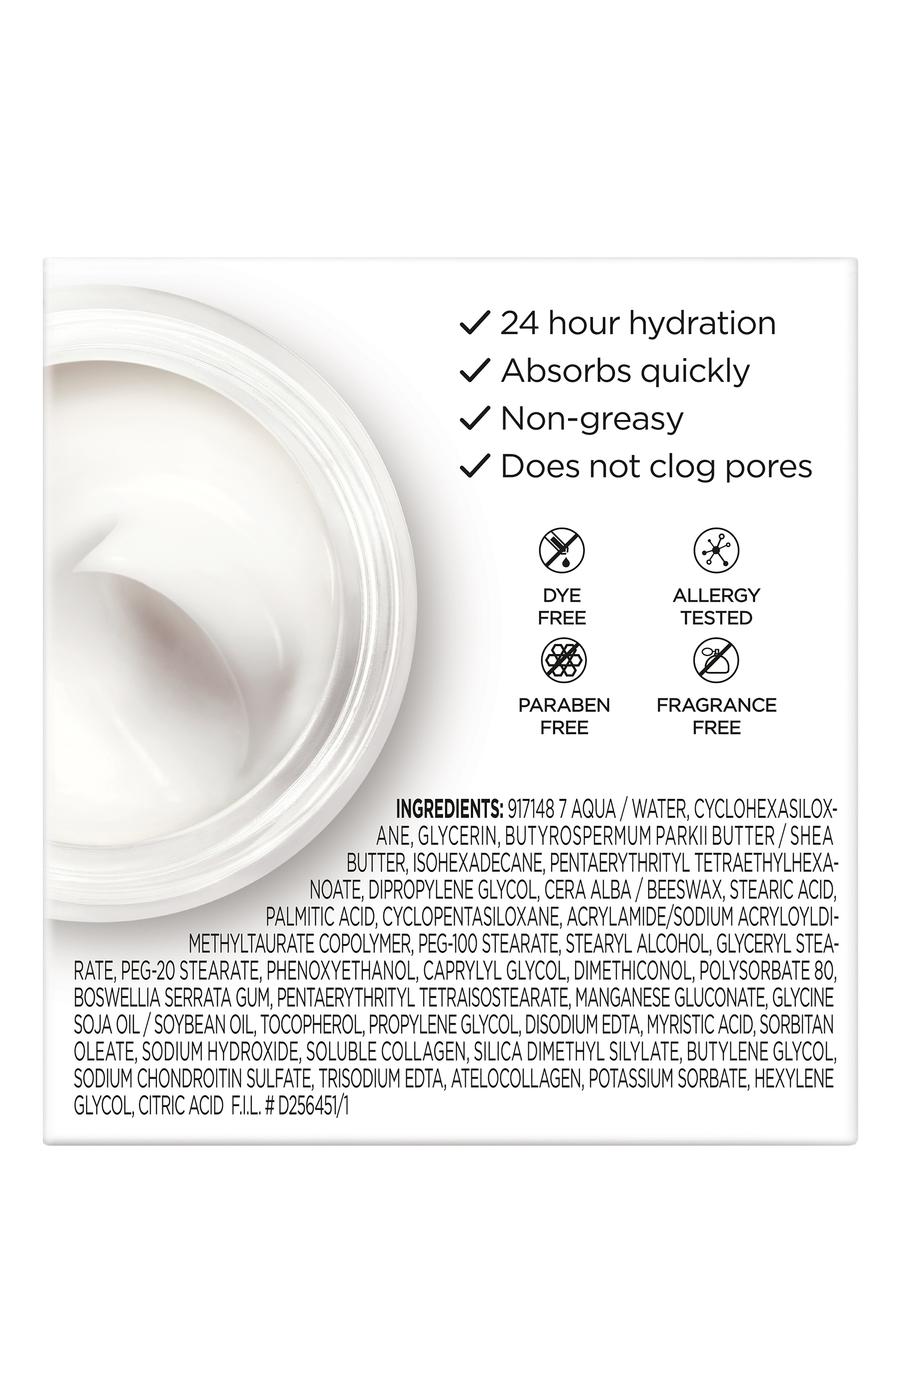 L'Oréal Paris Collagen Moisture Filler Facial Day Cream Fragrance Free; image 6 of 6